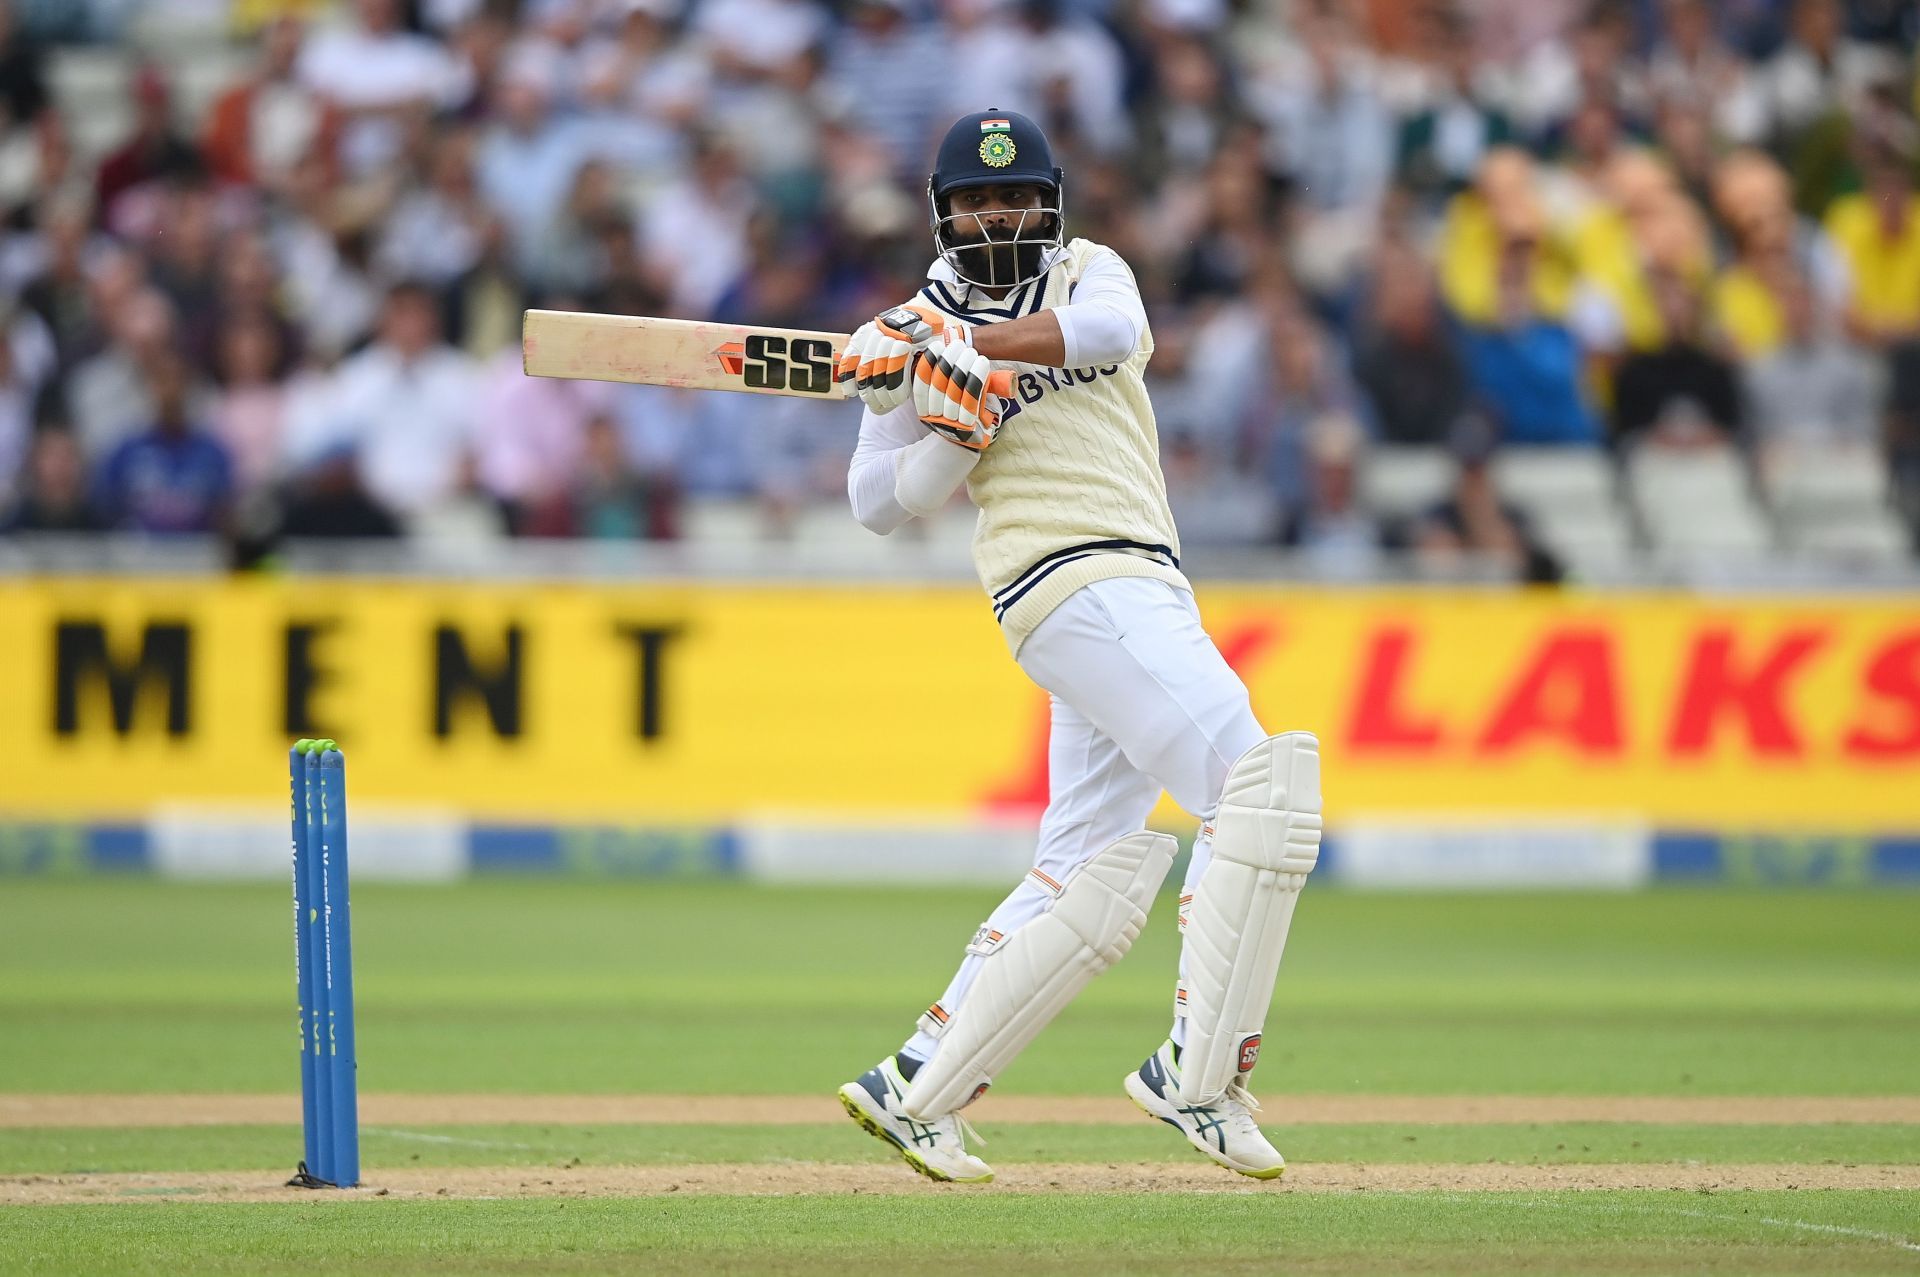 Ravindra Jadeja has not yet hit a six during his innings